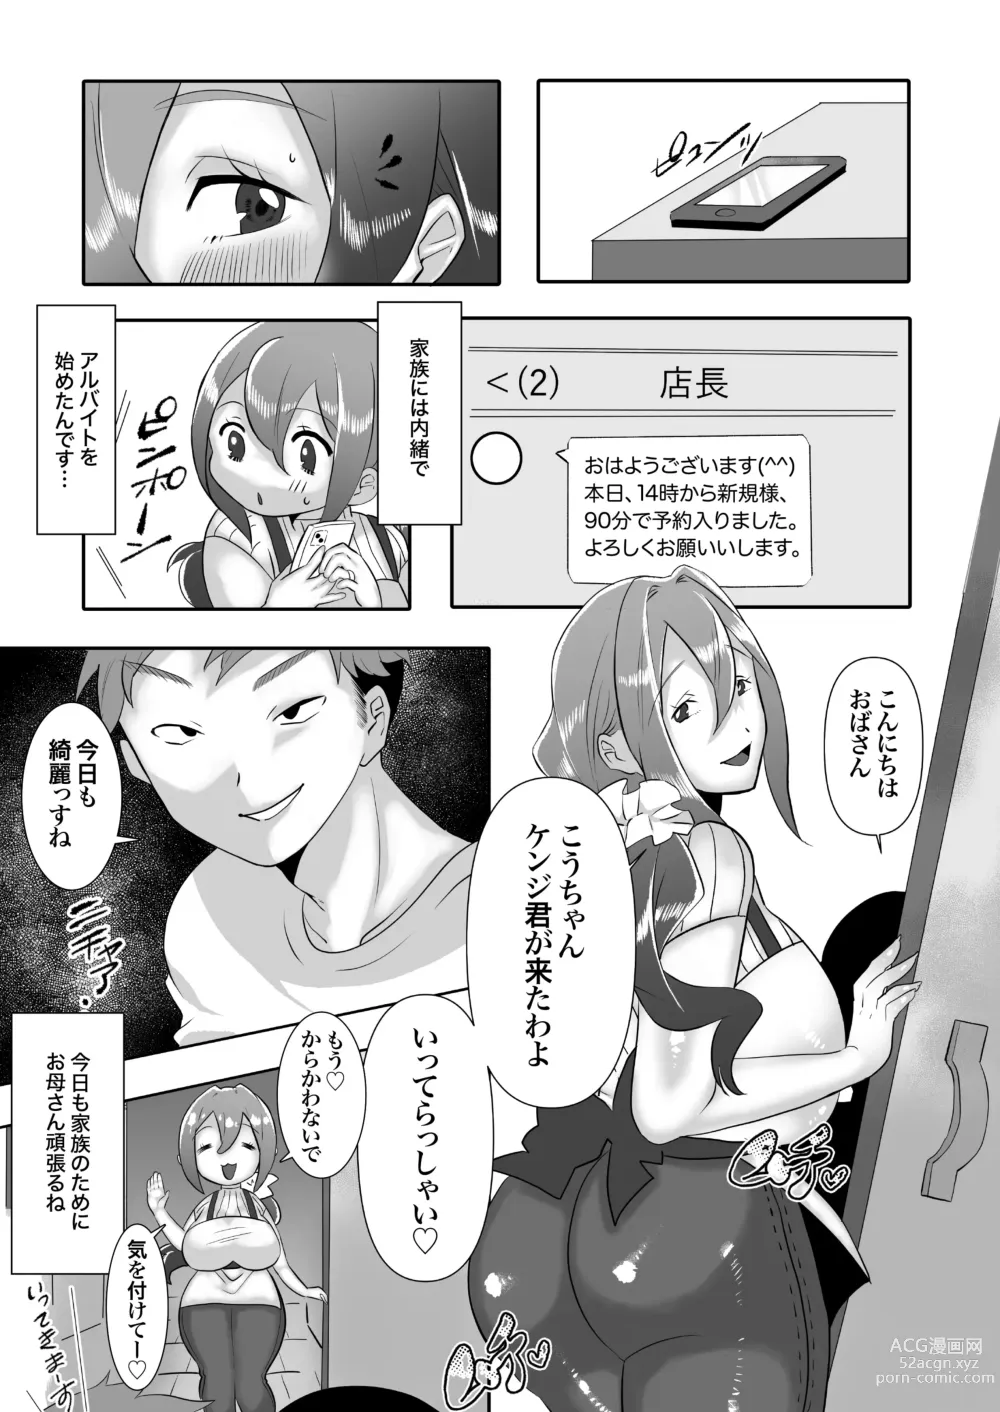 Page 6 of doujinshi DeliHeal Yondara Tomodachi no Kaa-chan ga Kita.